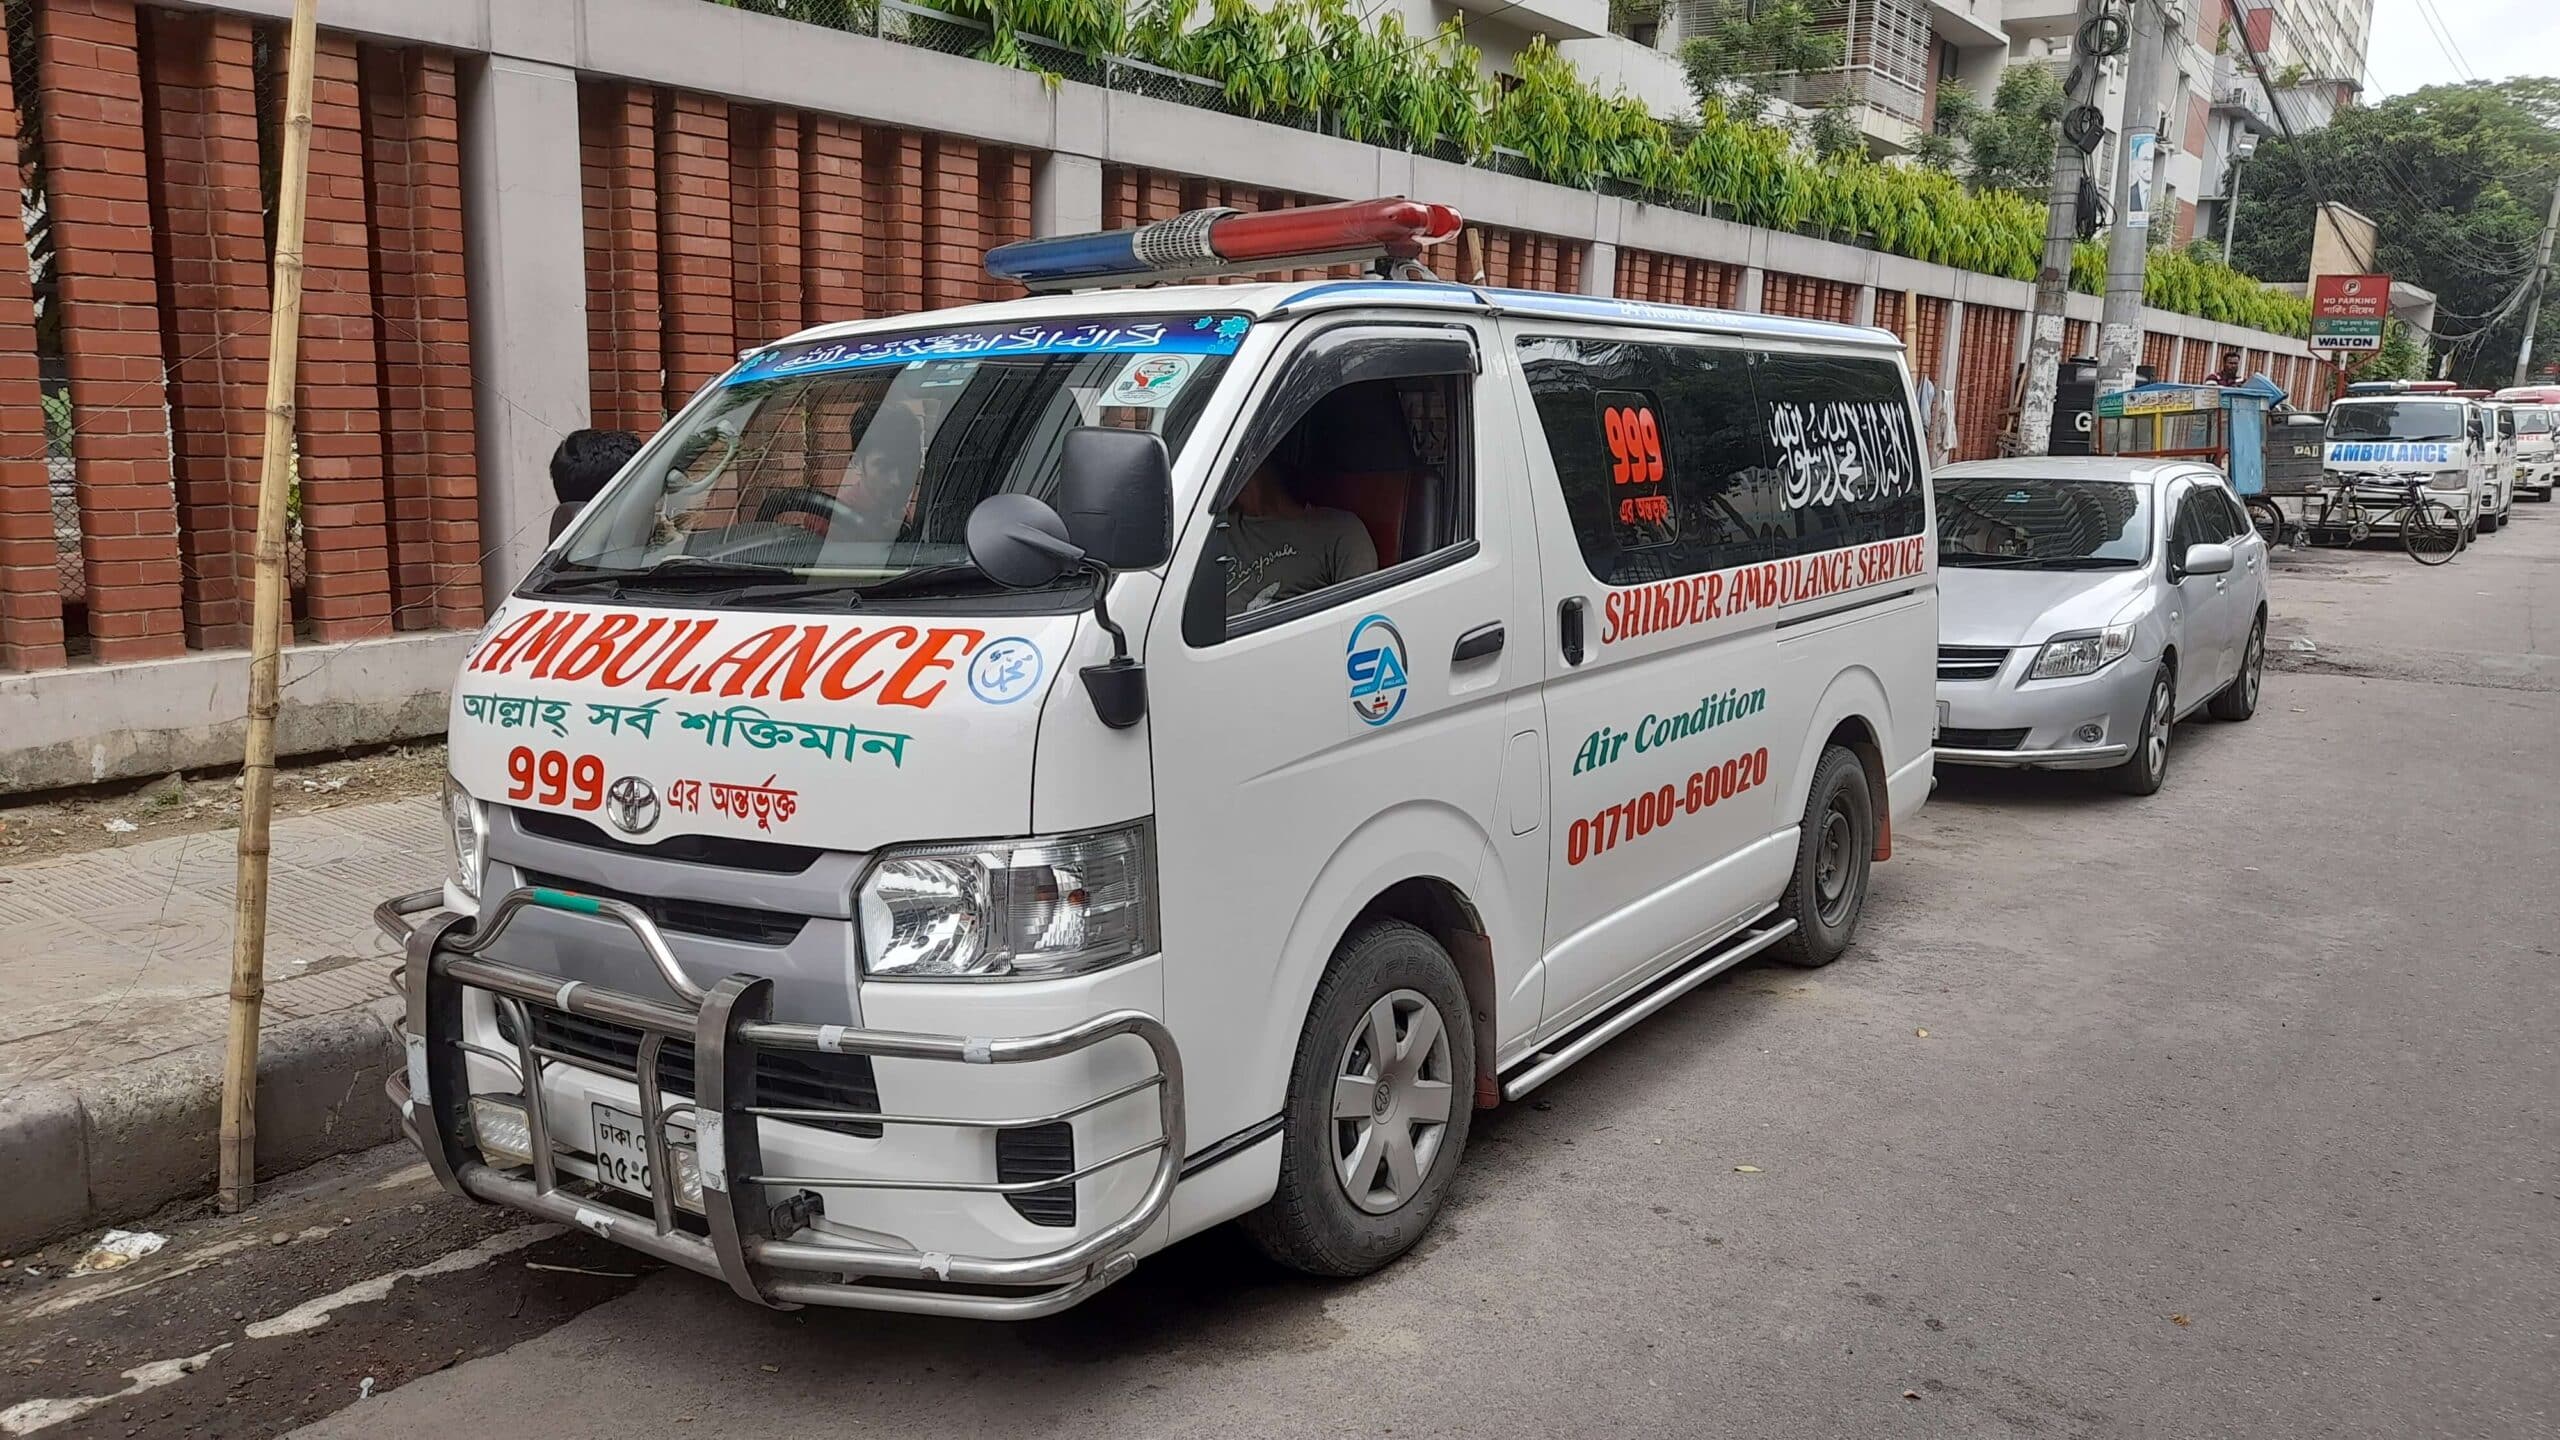 Trimohni-ambulance-service